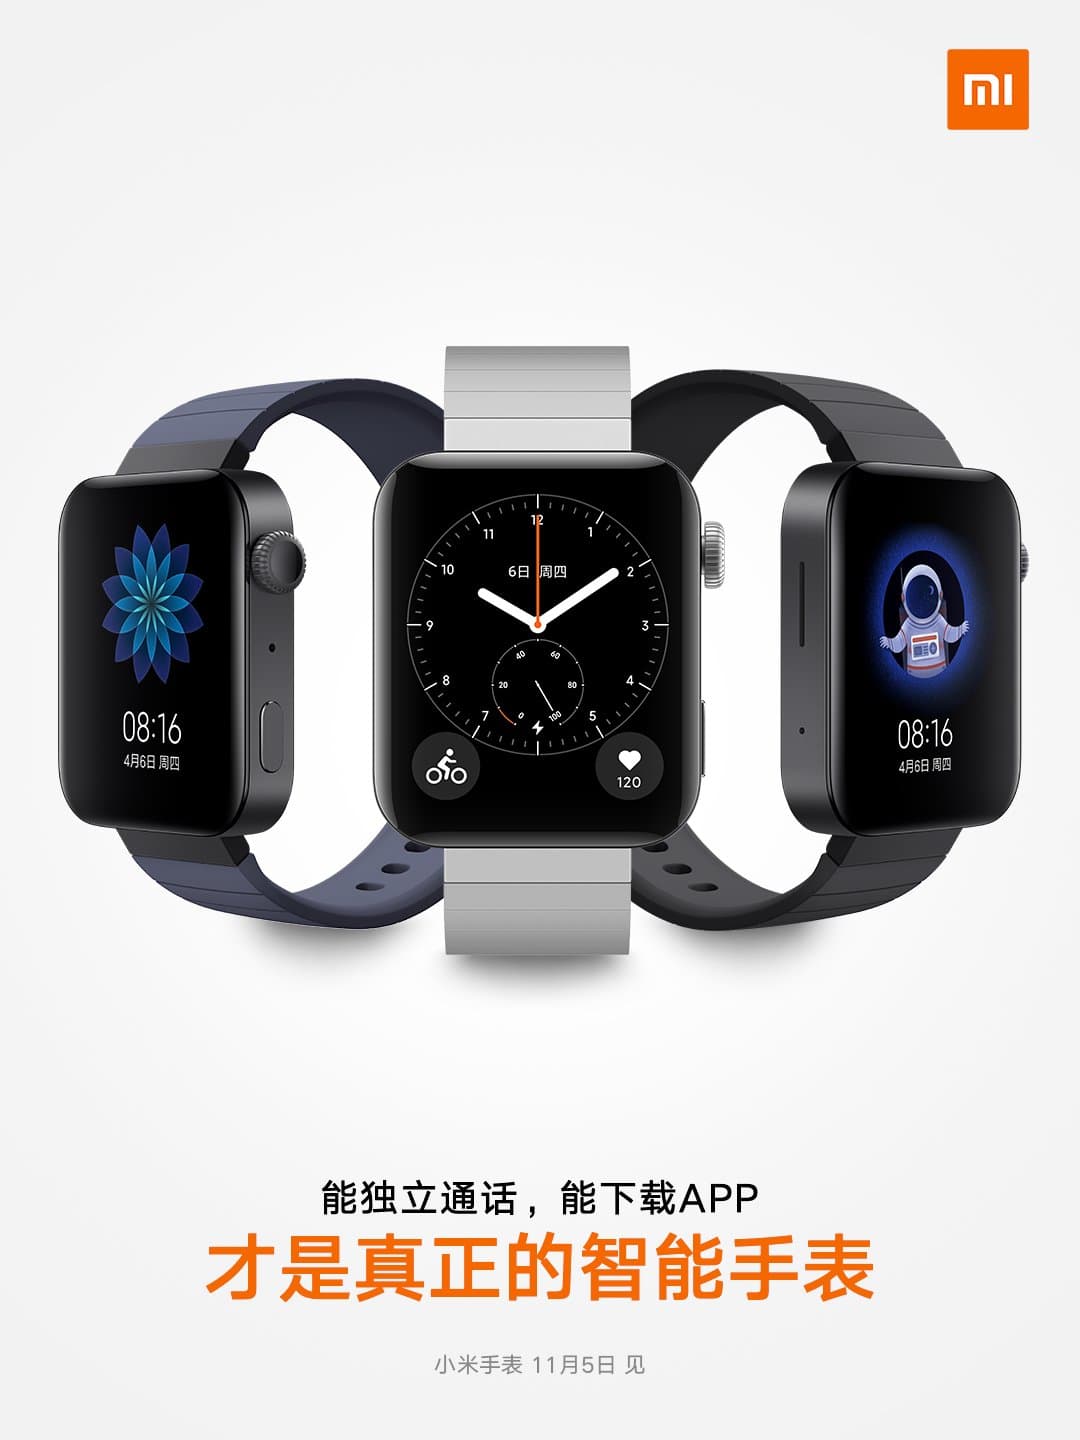 Image 10 : La future montre Xiaomi : un smartphone au poignet